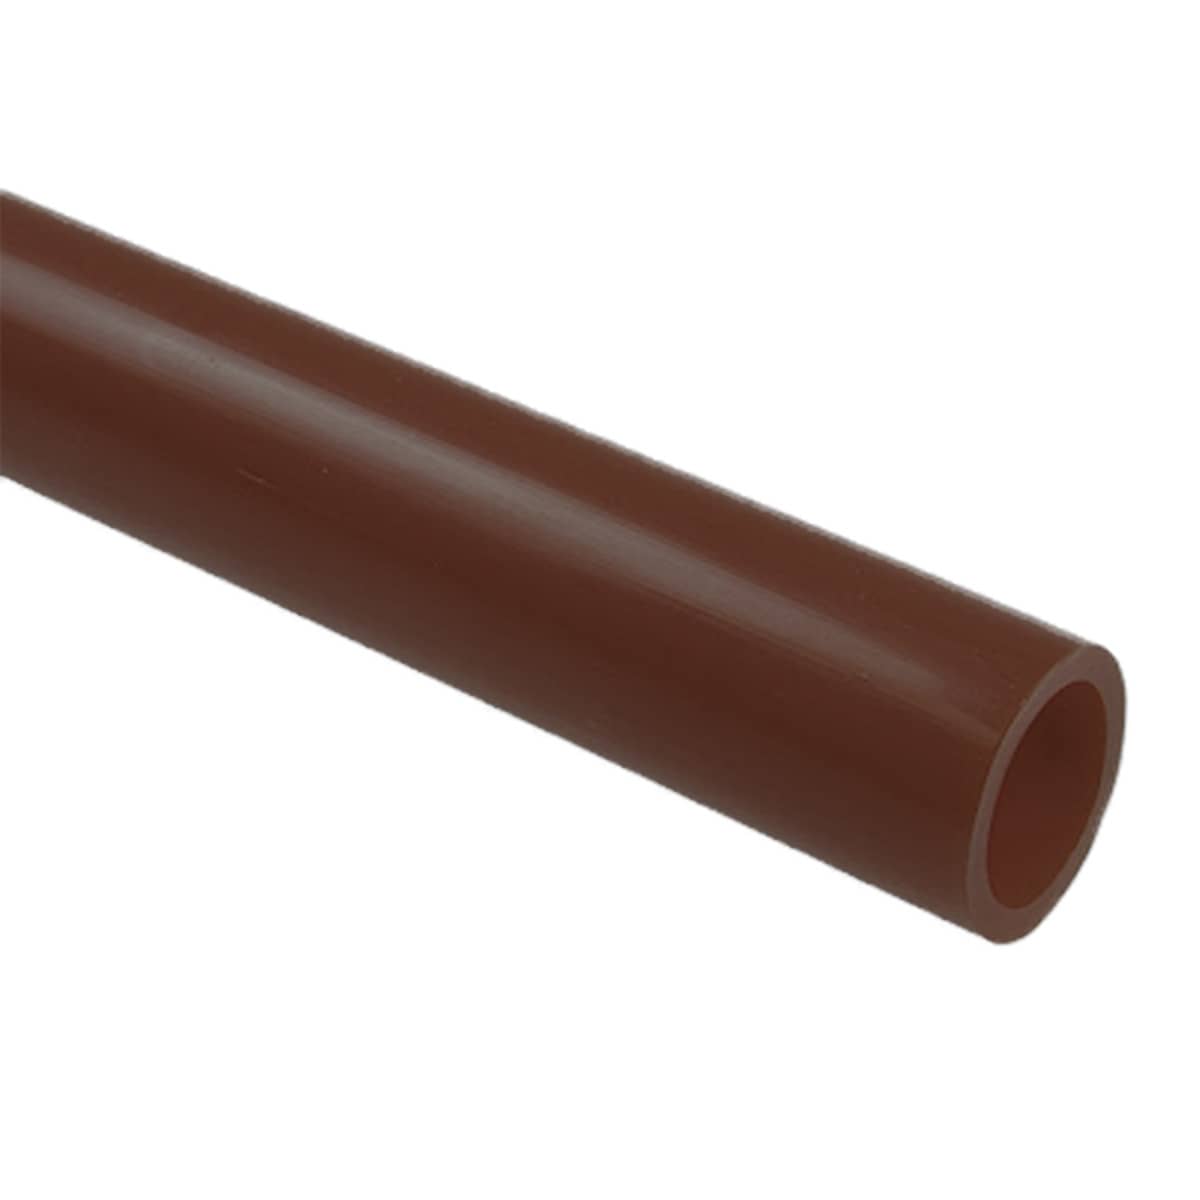 Tubo Flexible Super-Flex de 8 mm para Sistemas Blumat Color Cafe o Rojo